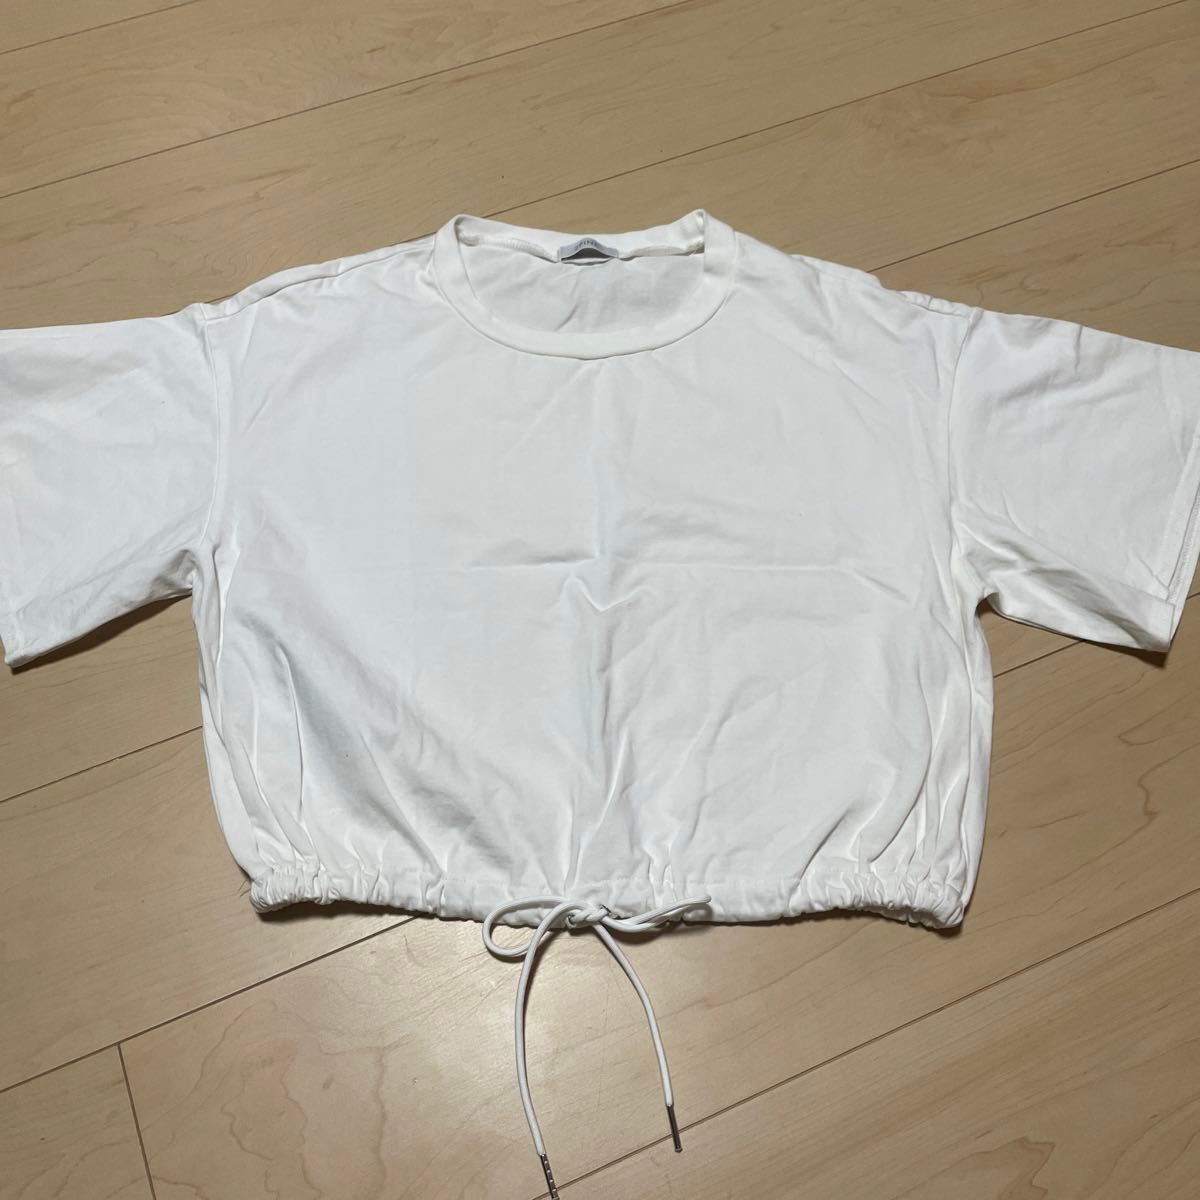 2PINK 裾ギャザー 紐リボン 絞りデザイン ショート丈 半袖Tシャツ 白 Lサイズ Tシャツ 半袖